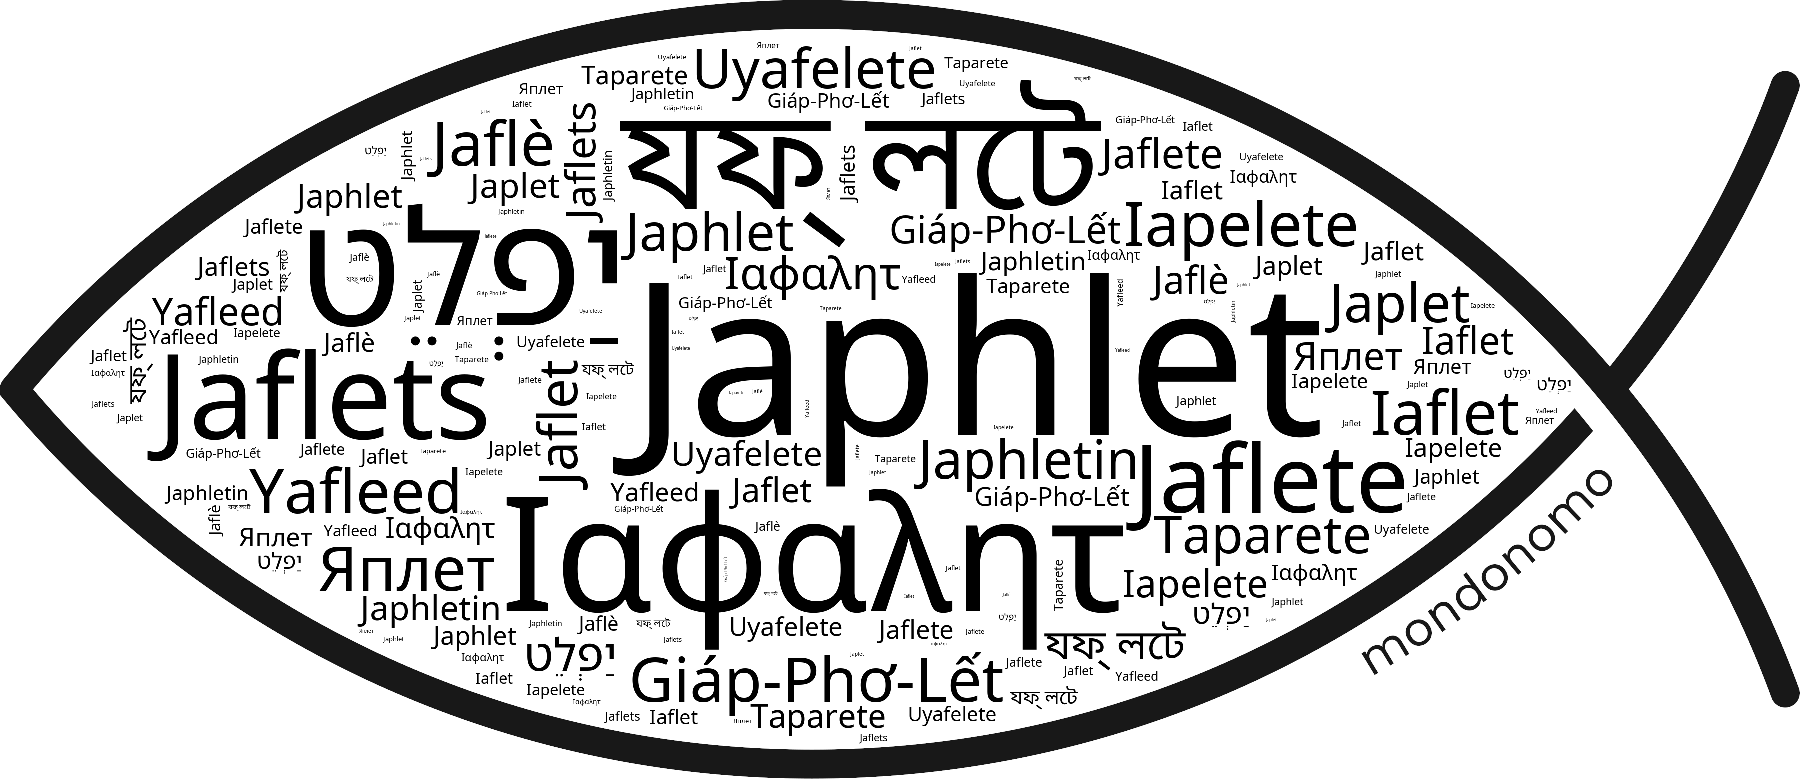 Name Japhlet in the world's Bibles